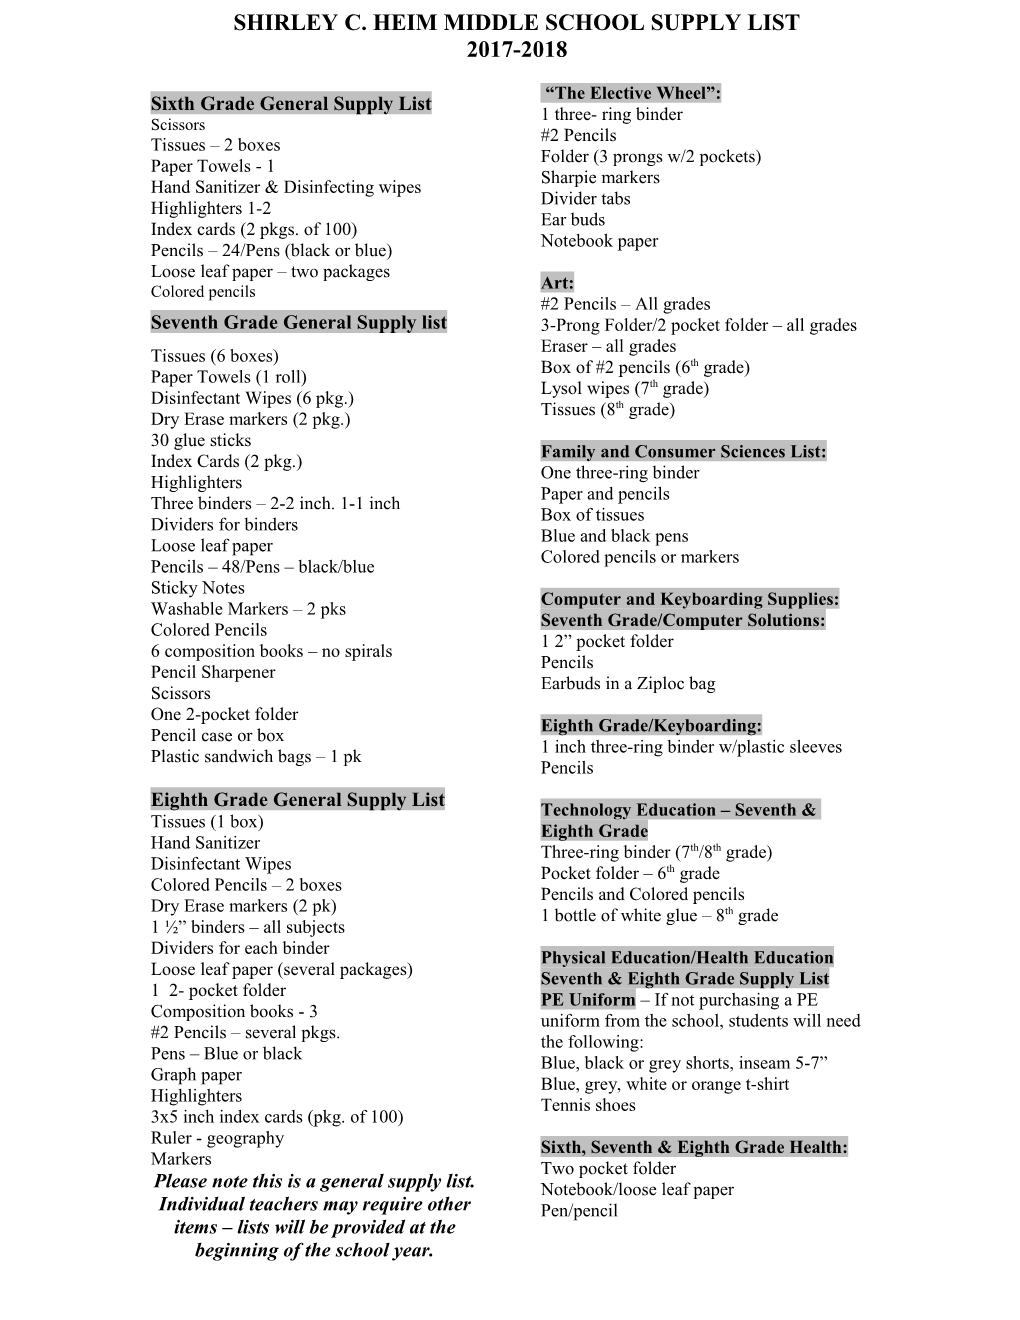 Sixth Grade General Supply List